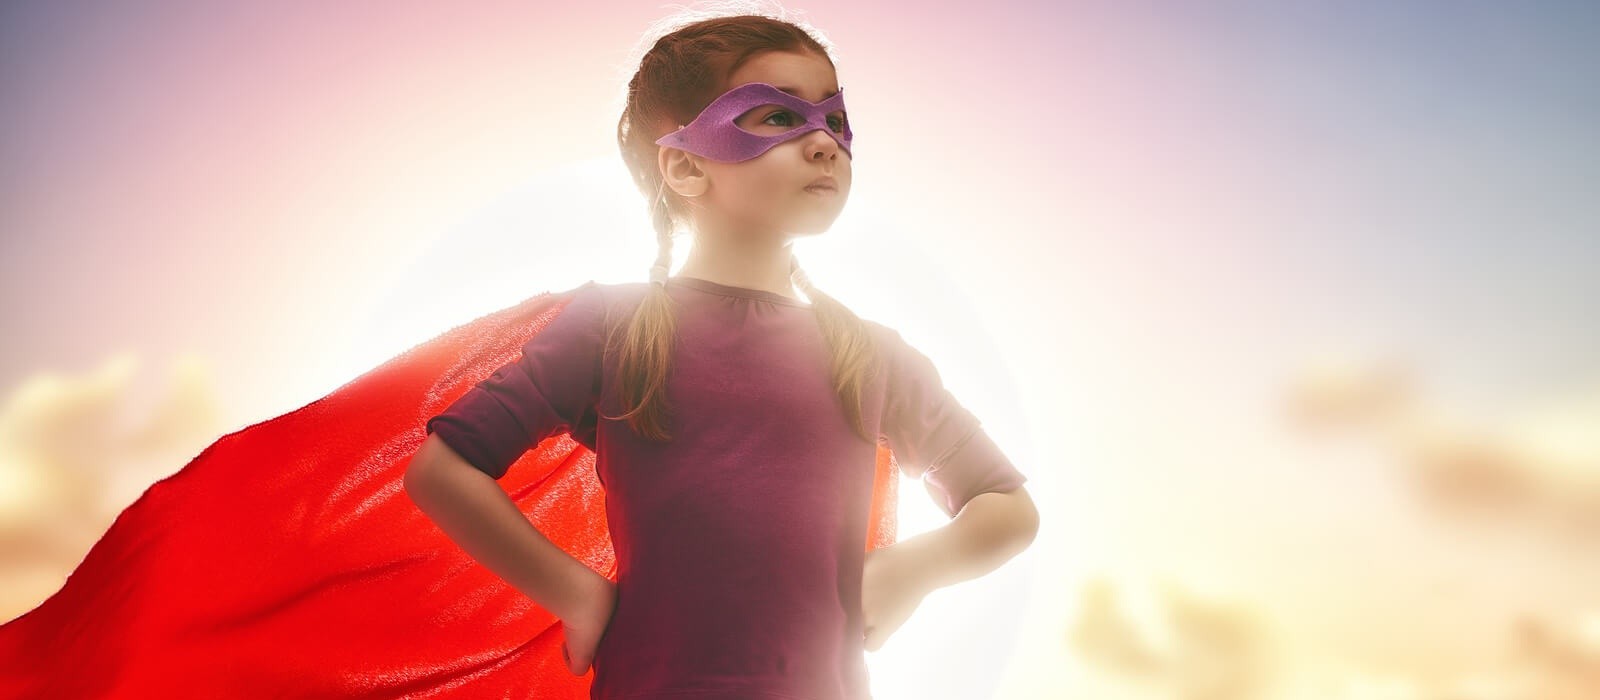 Little child girl plays superhero. Child on the background of su